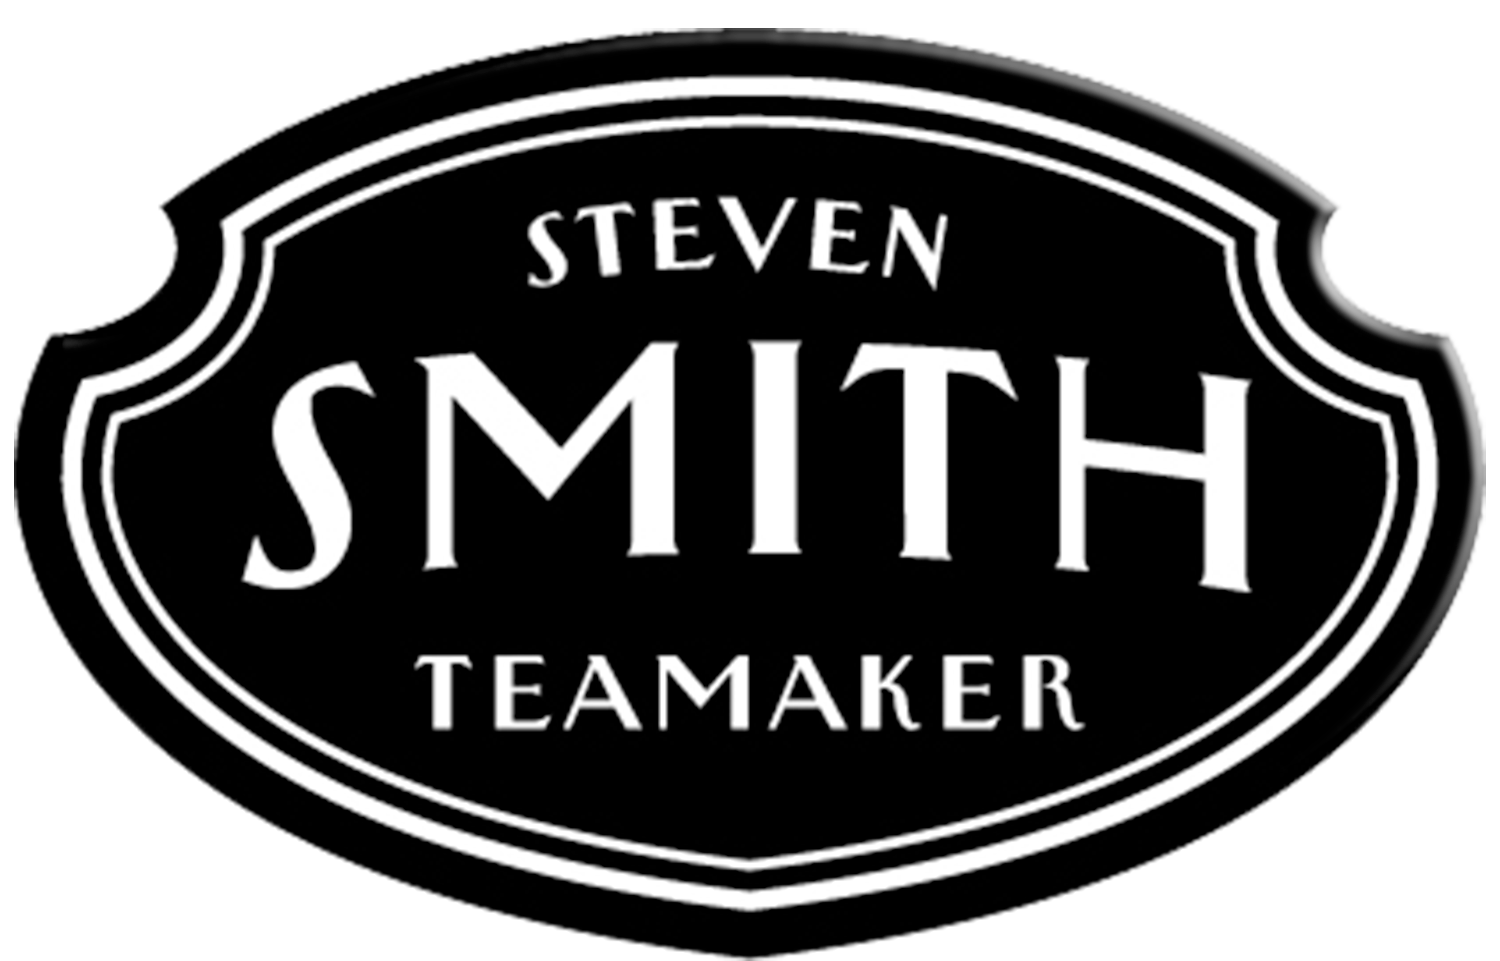 The Human Bean Coffee Franchise: Steven Smith Teamaker